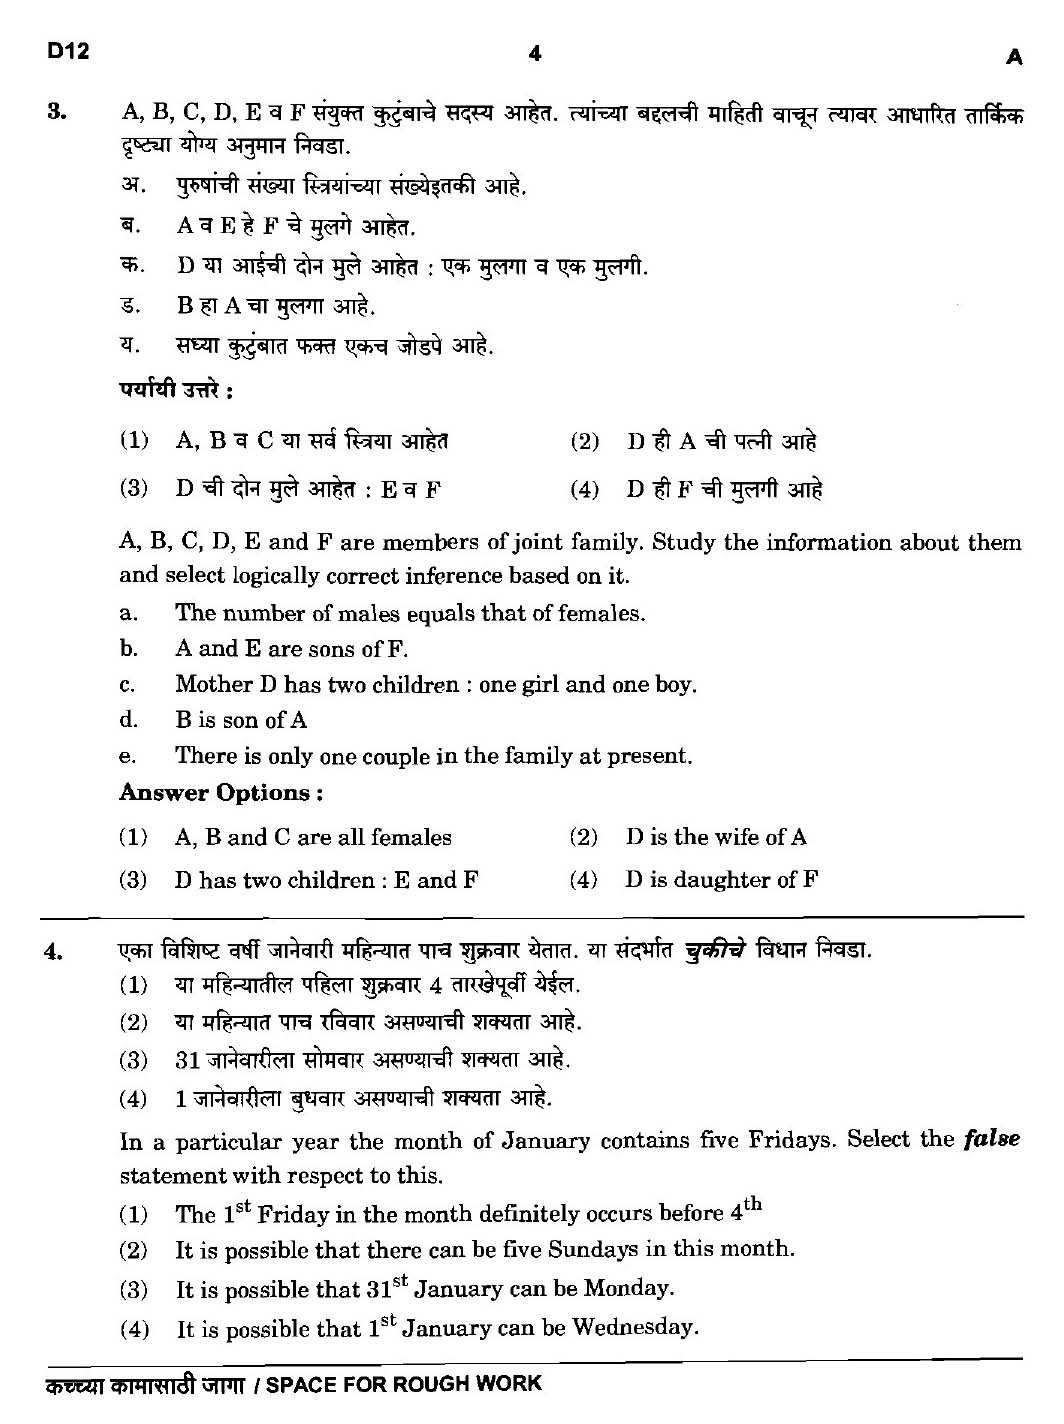 Maharashtra PSC Clerk Typist Main Exam Question Paper 2018 3